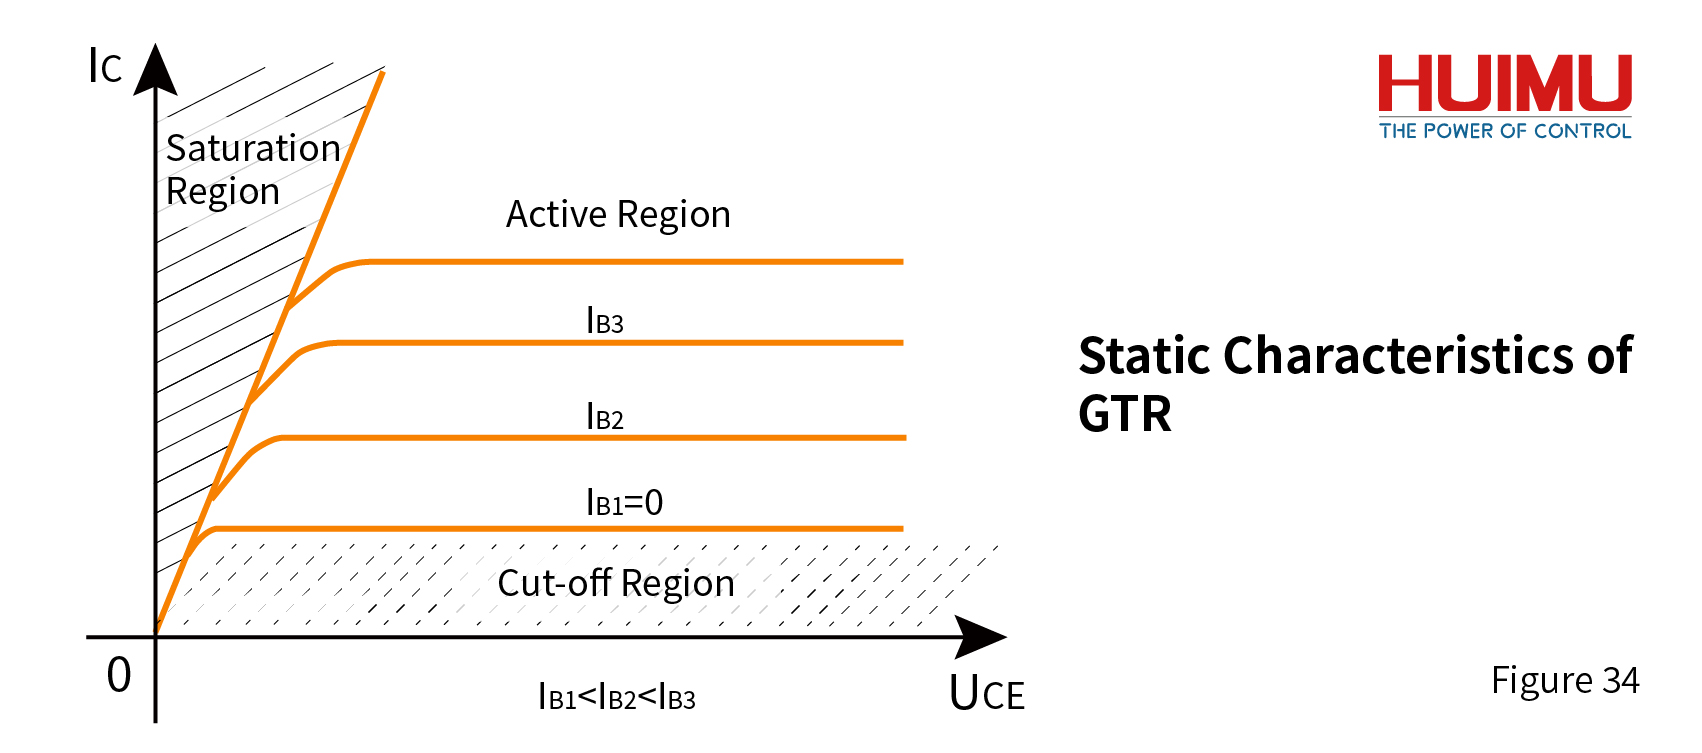 Static Characteristics of GTR